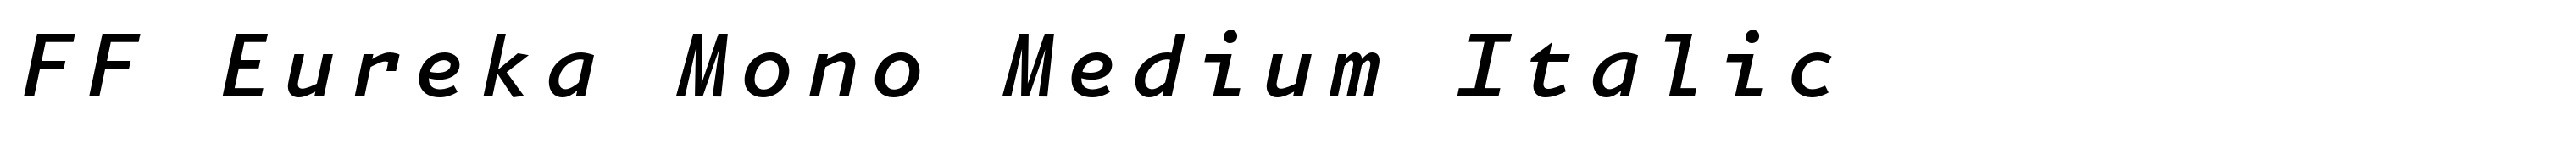 FF Eureka Mono Medium Italic